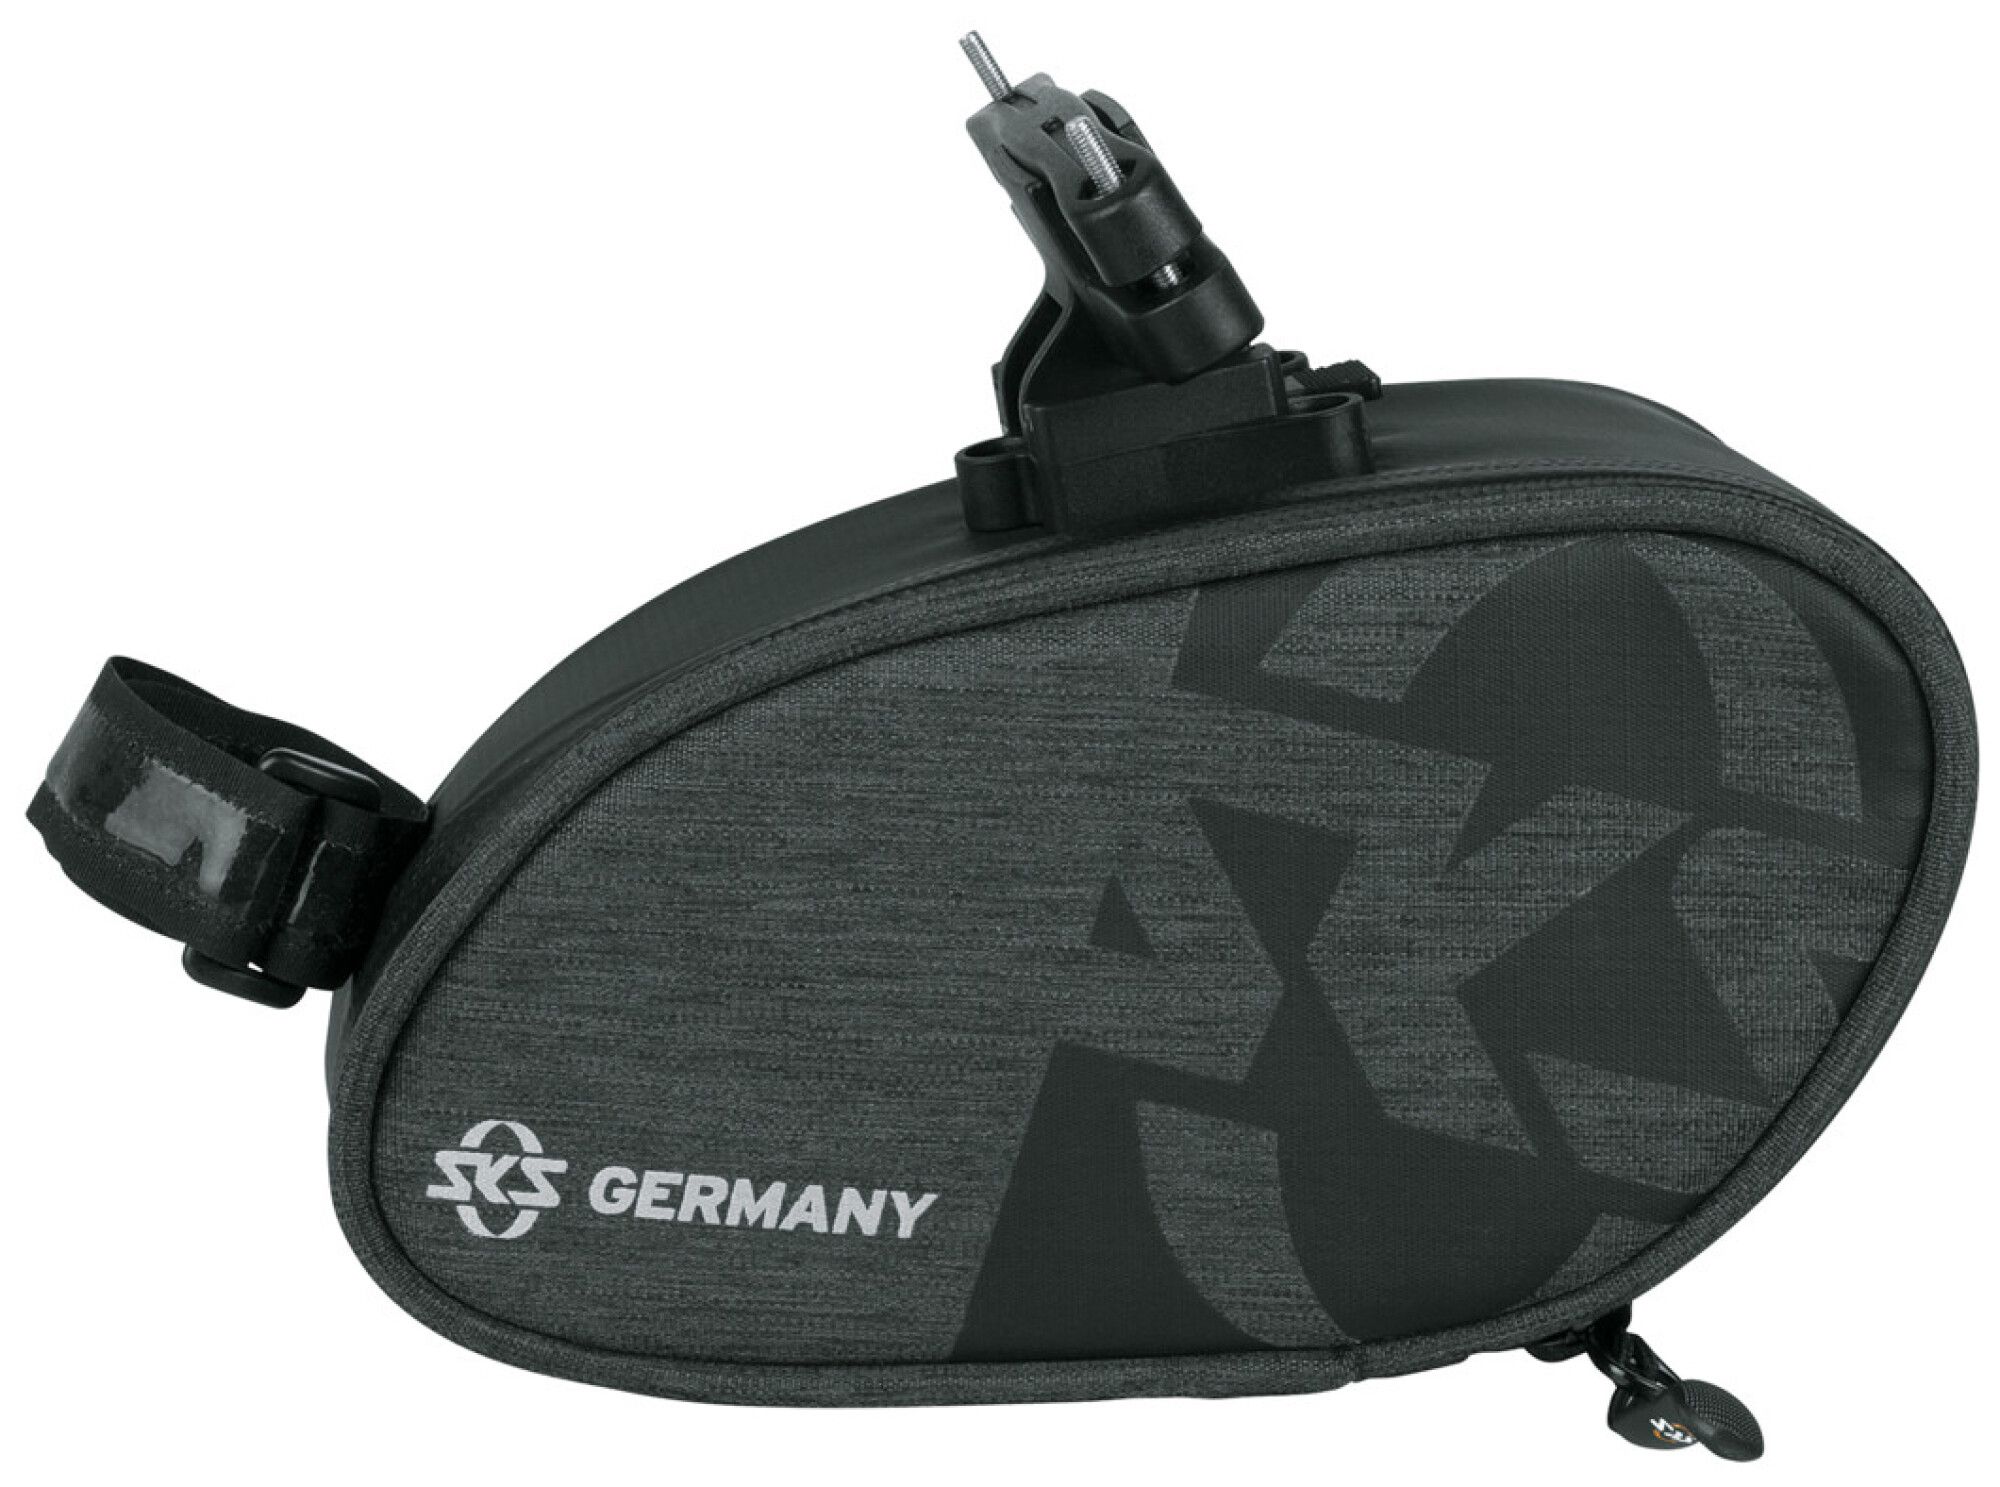 SKS Germany TRAVELLER CLICK 800 (Bild 1)